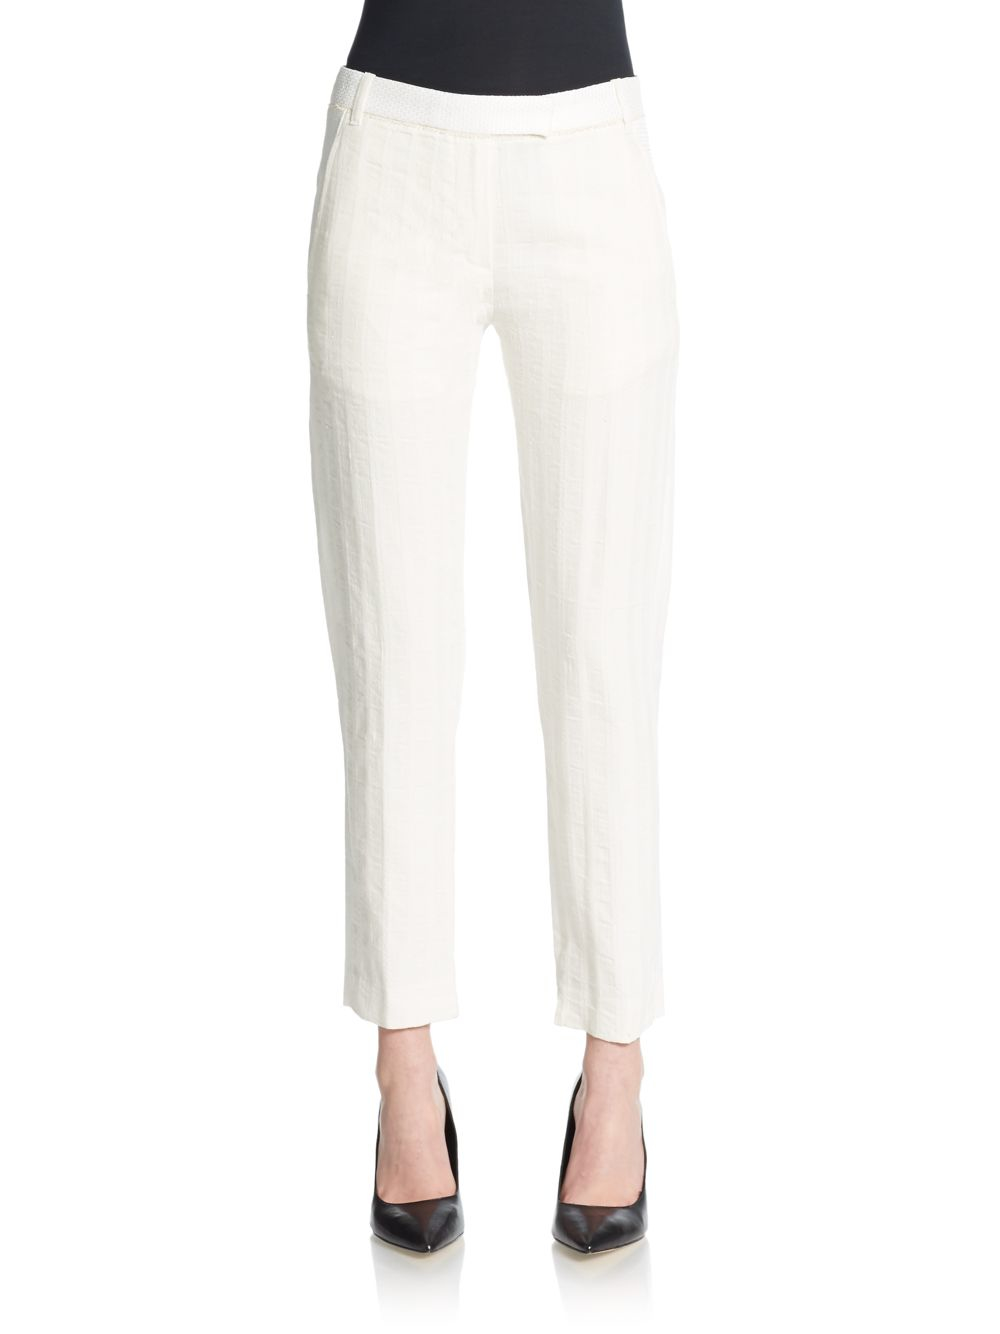 Lyst - Ann Demeulemeester Slim Ankle Pants in White